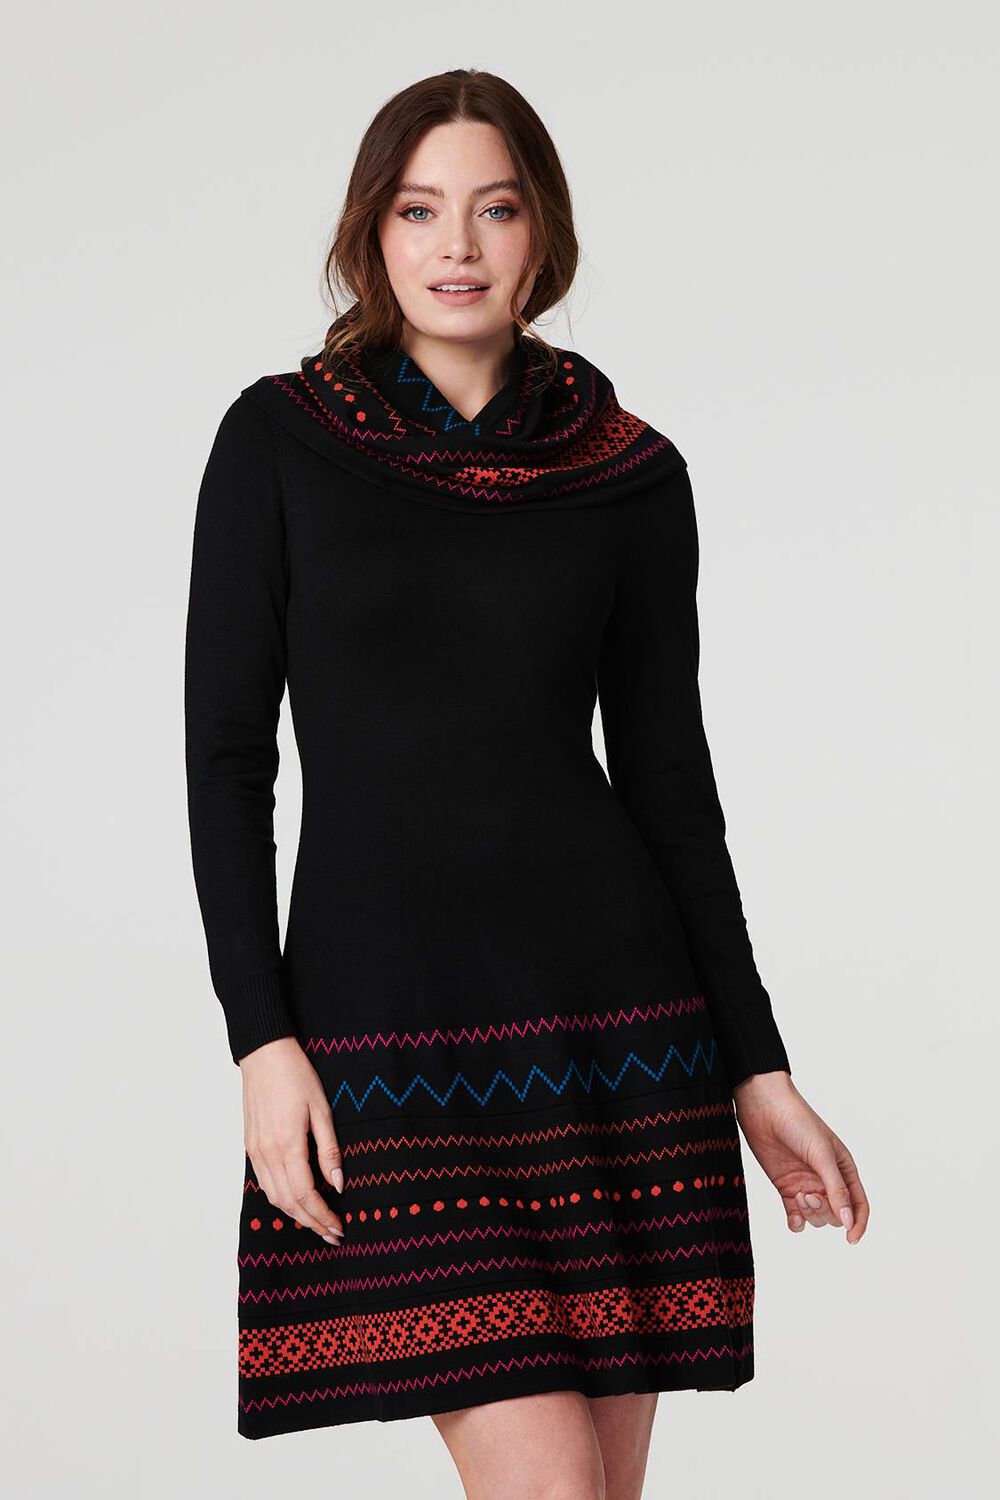 Izabel London Black - Printed Knit Skater Dress With Scarf, Size: 14